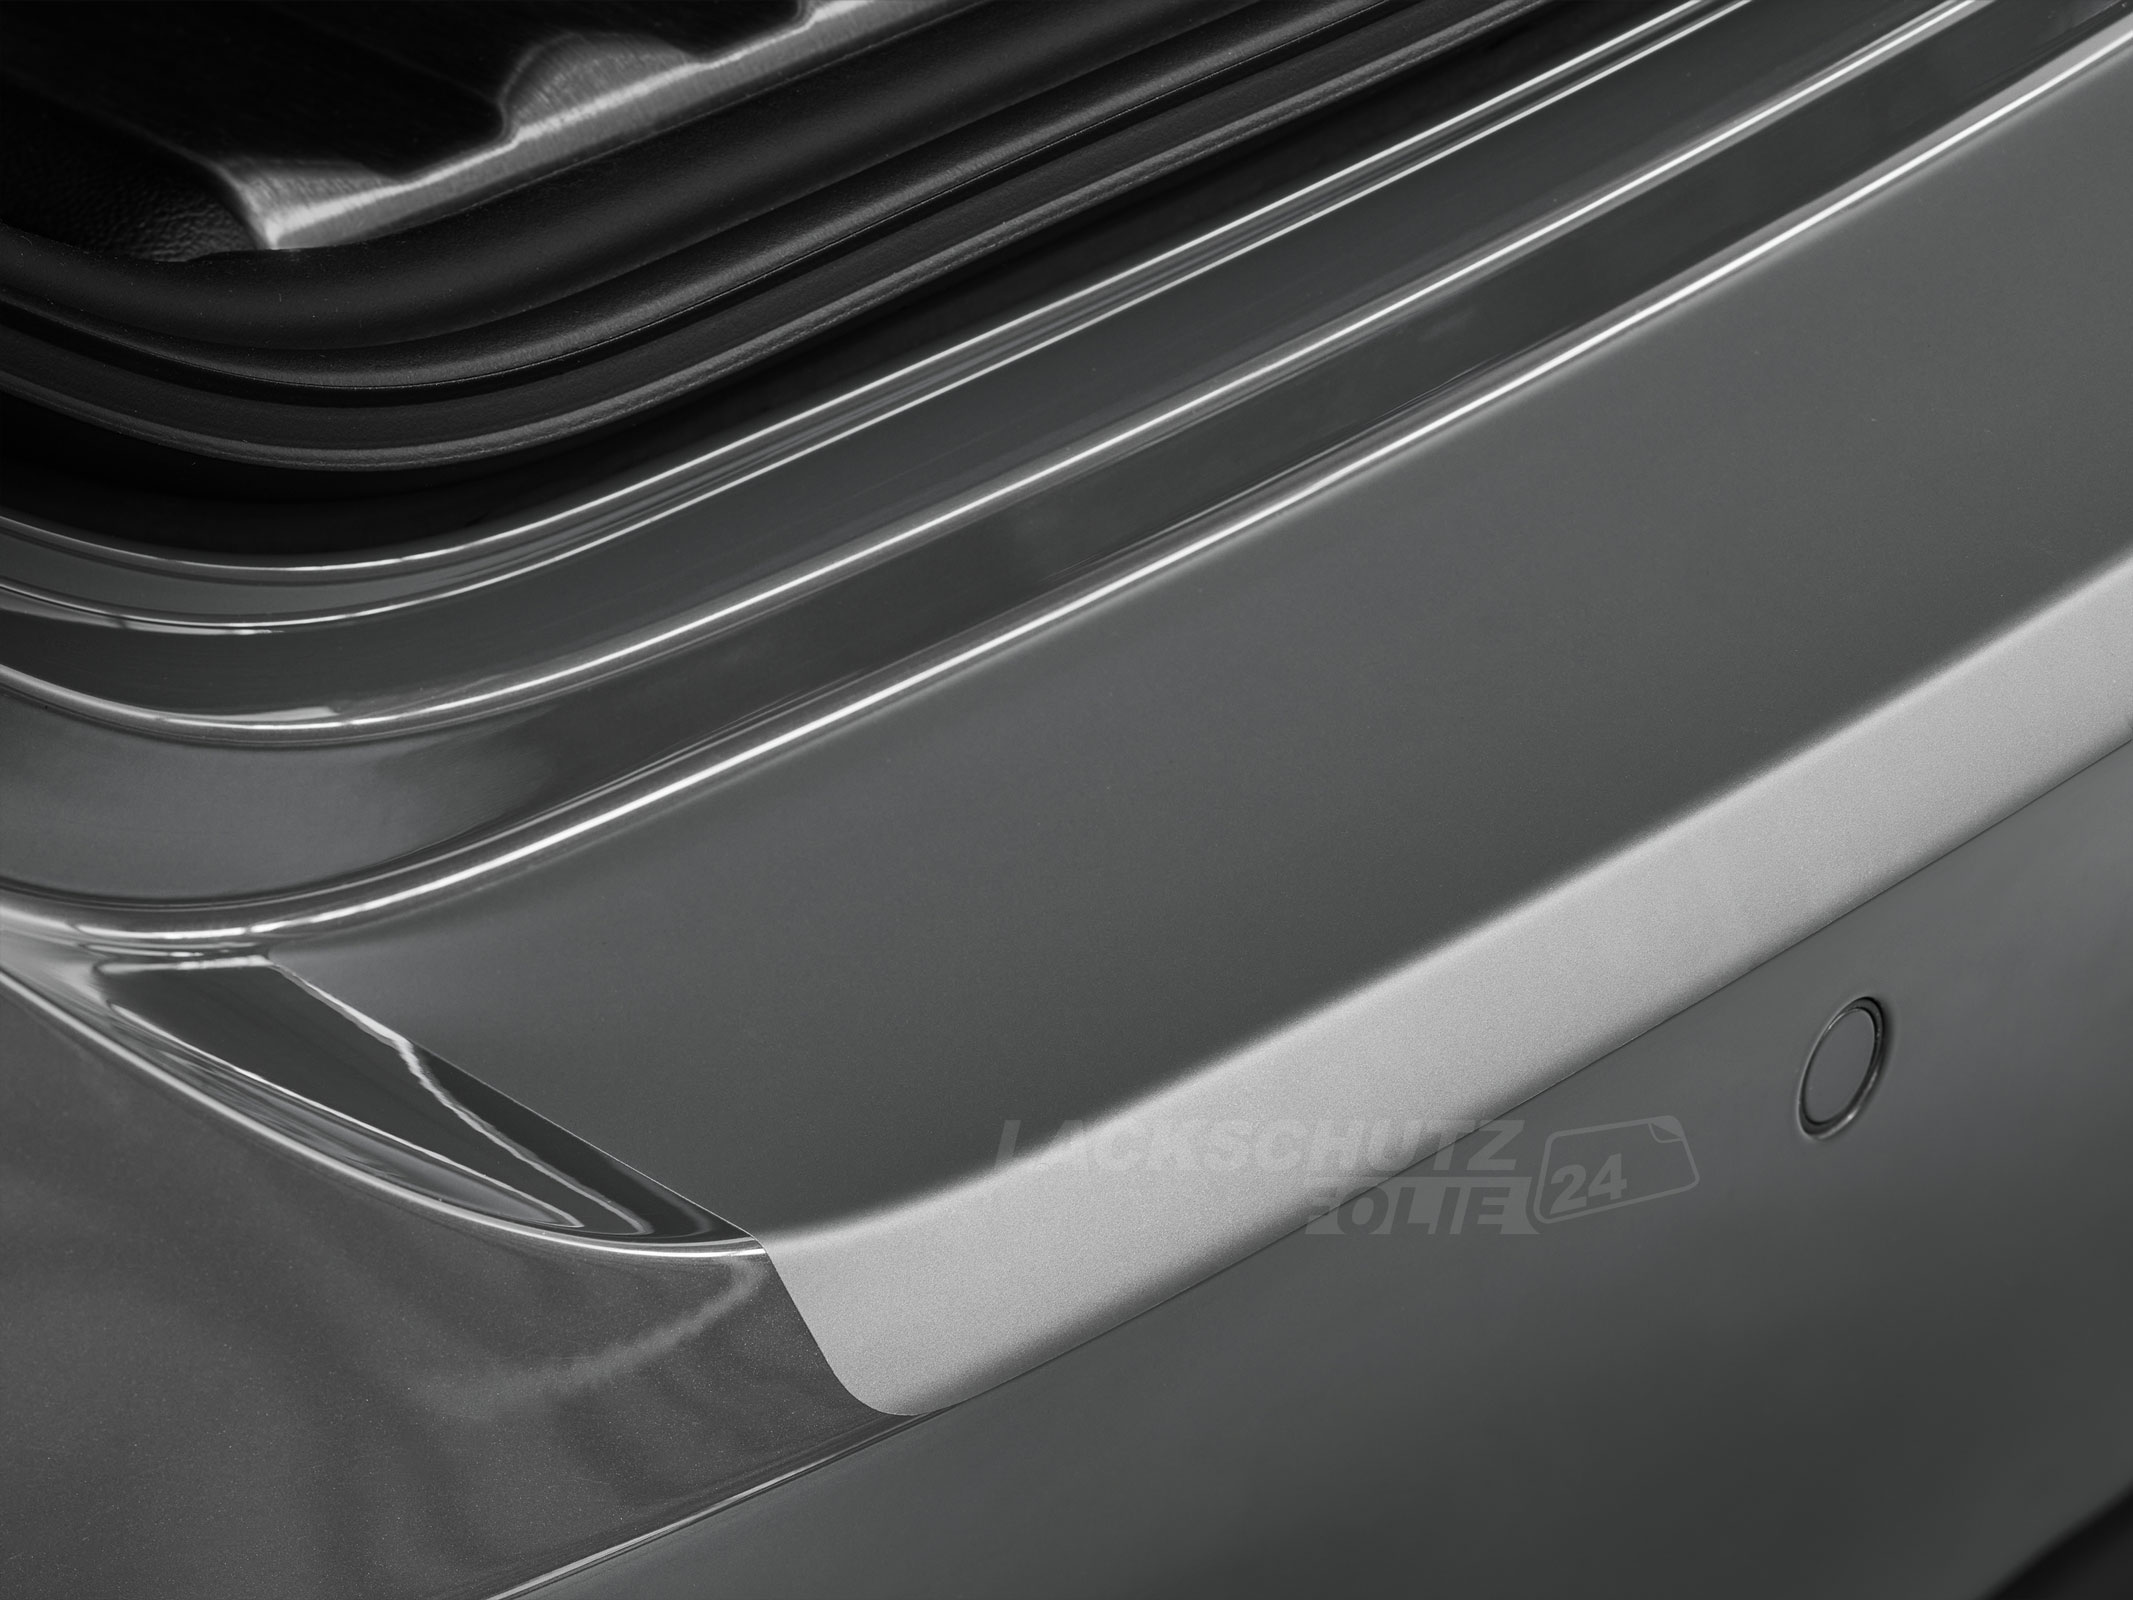 Ladekantenschutzfolie - Transparent Glatt MATT 110 µm stark  für Toyota Avensis Limousine Typ T27, BJ 2008-2011